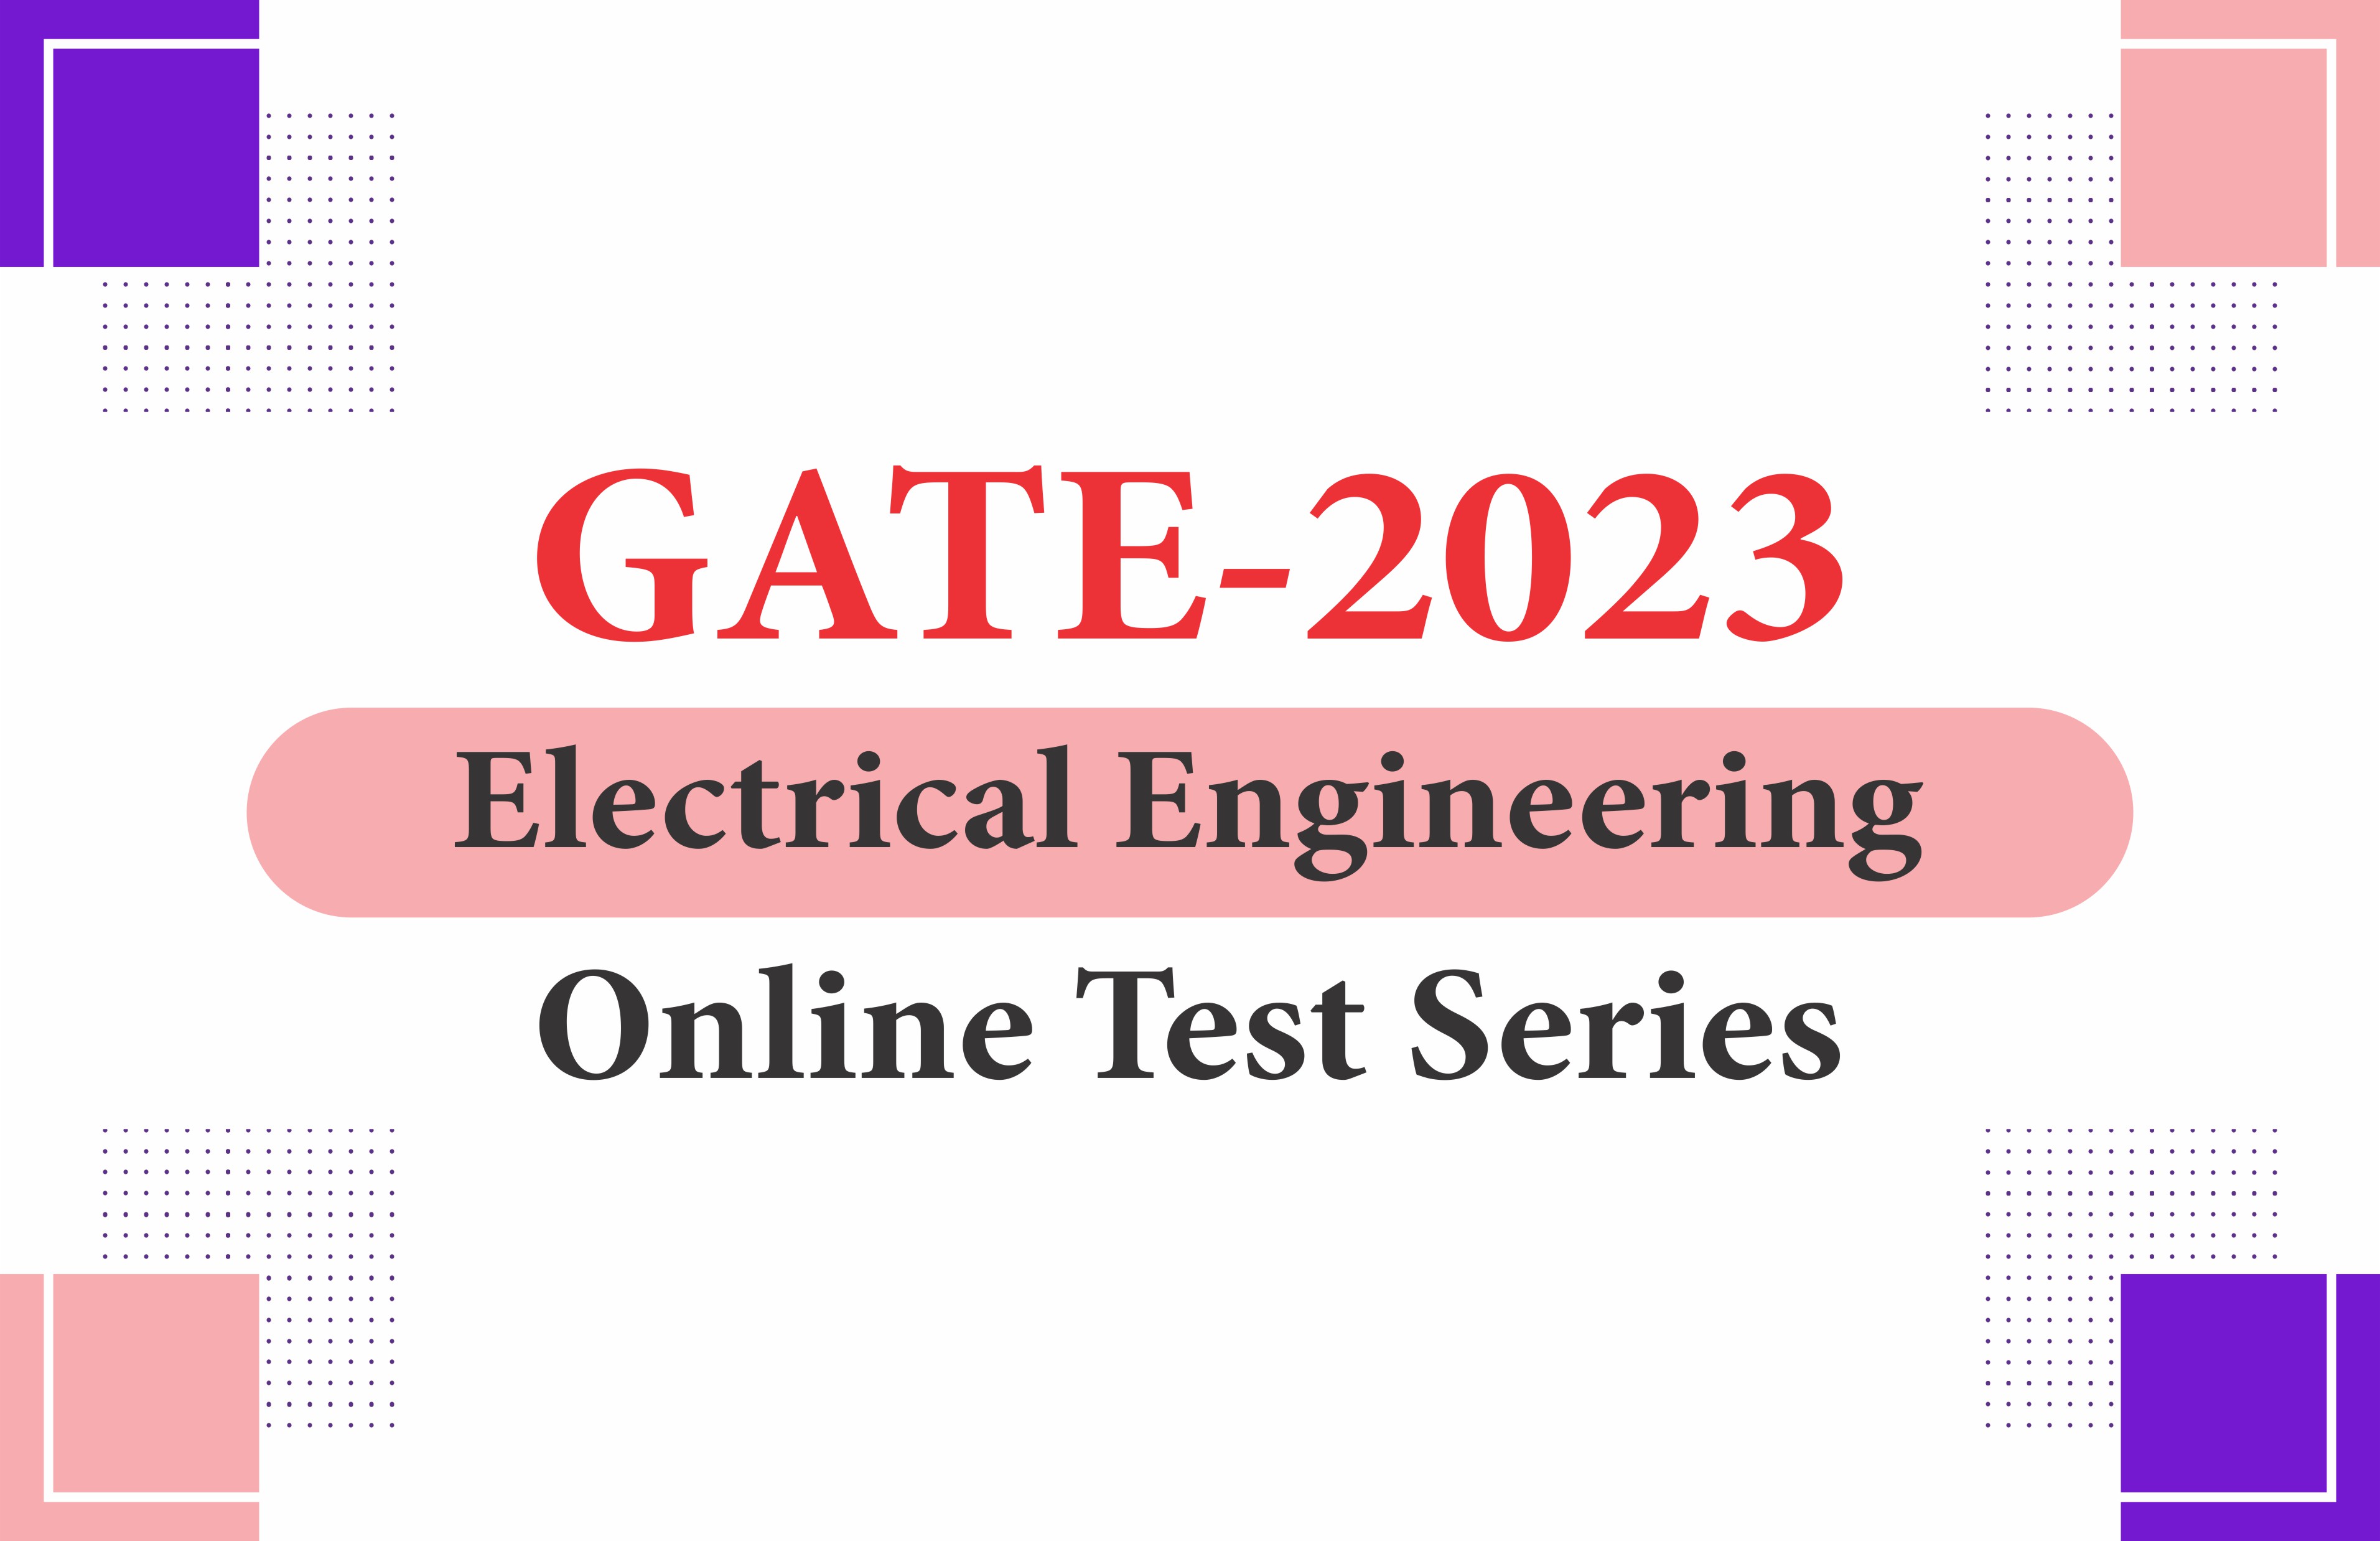 GATE -2023 Electrical Engineering Online Test Series